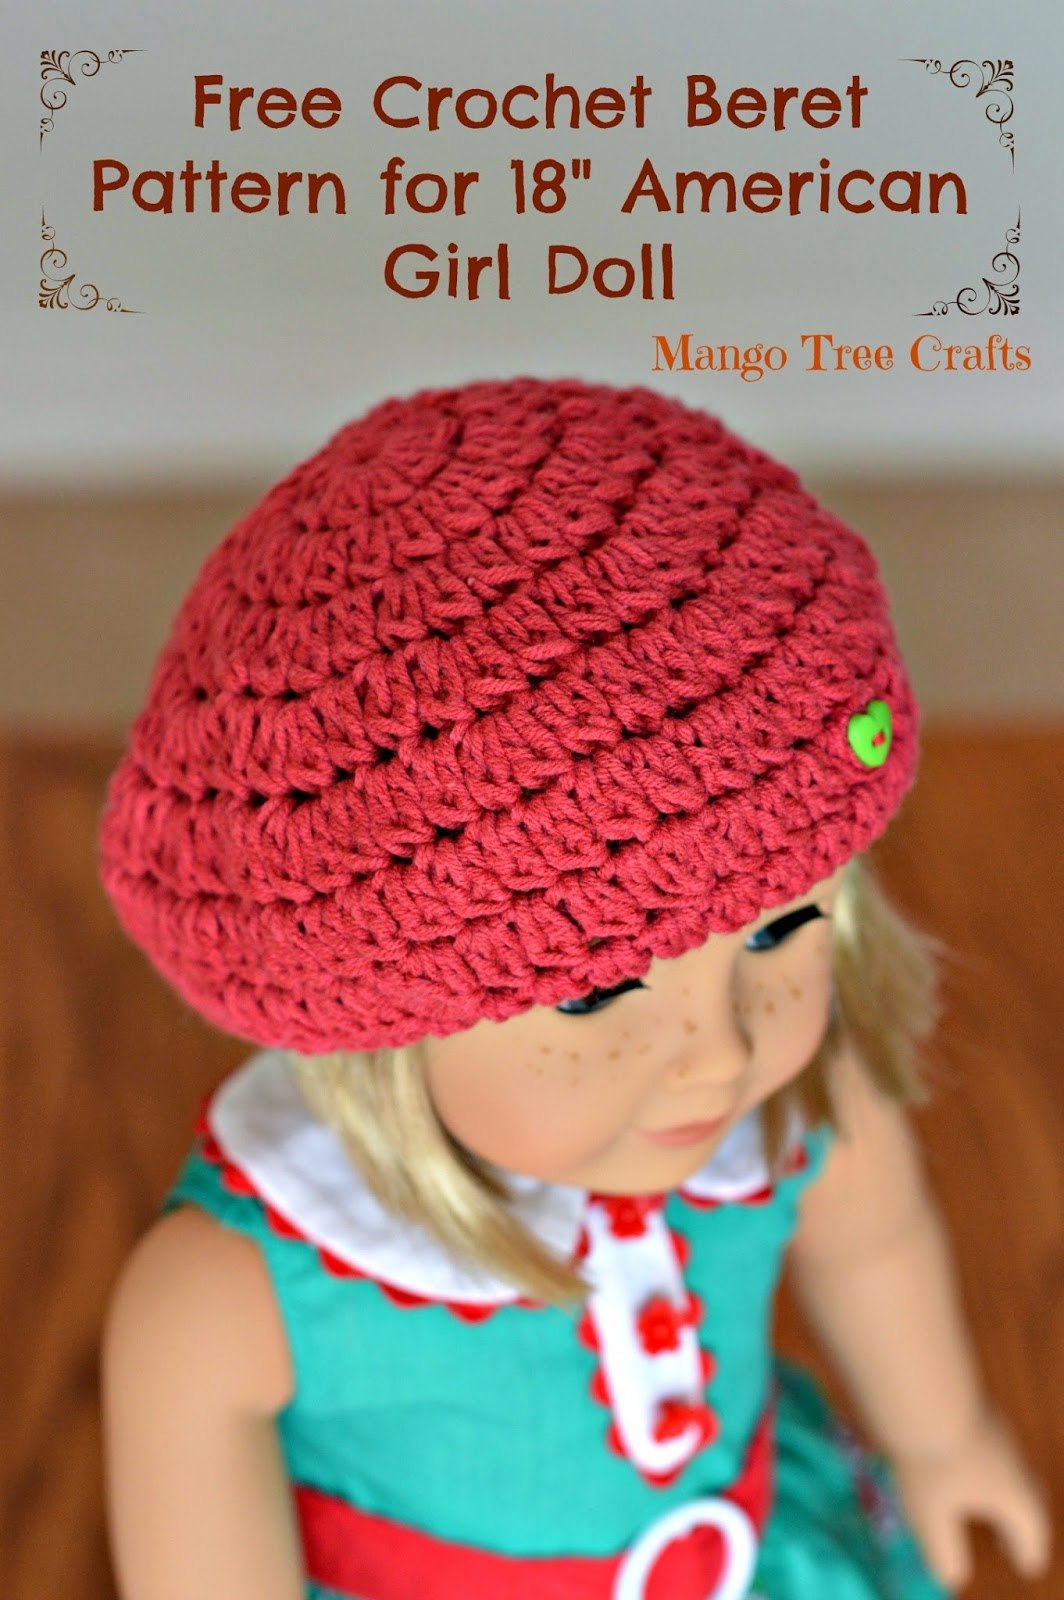 Free Crochet Patterns For American Girl Doll Crochet Beret Hat Pattern For 18 American Girl Doll